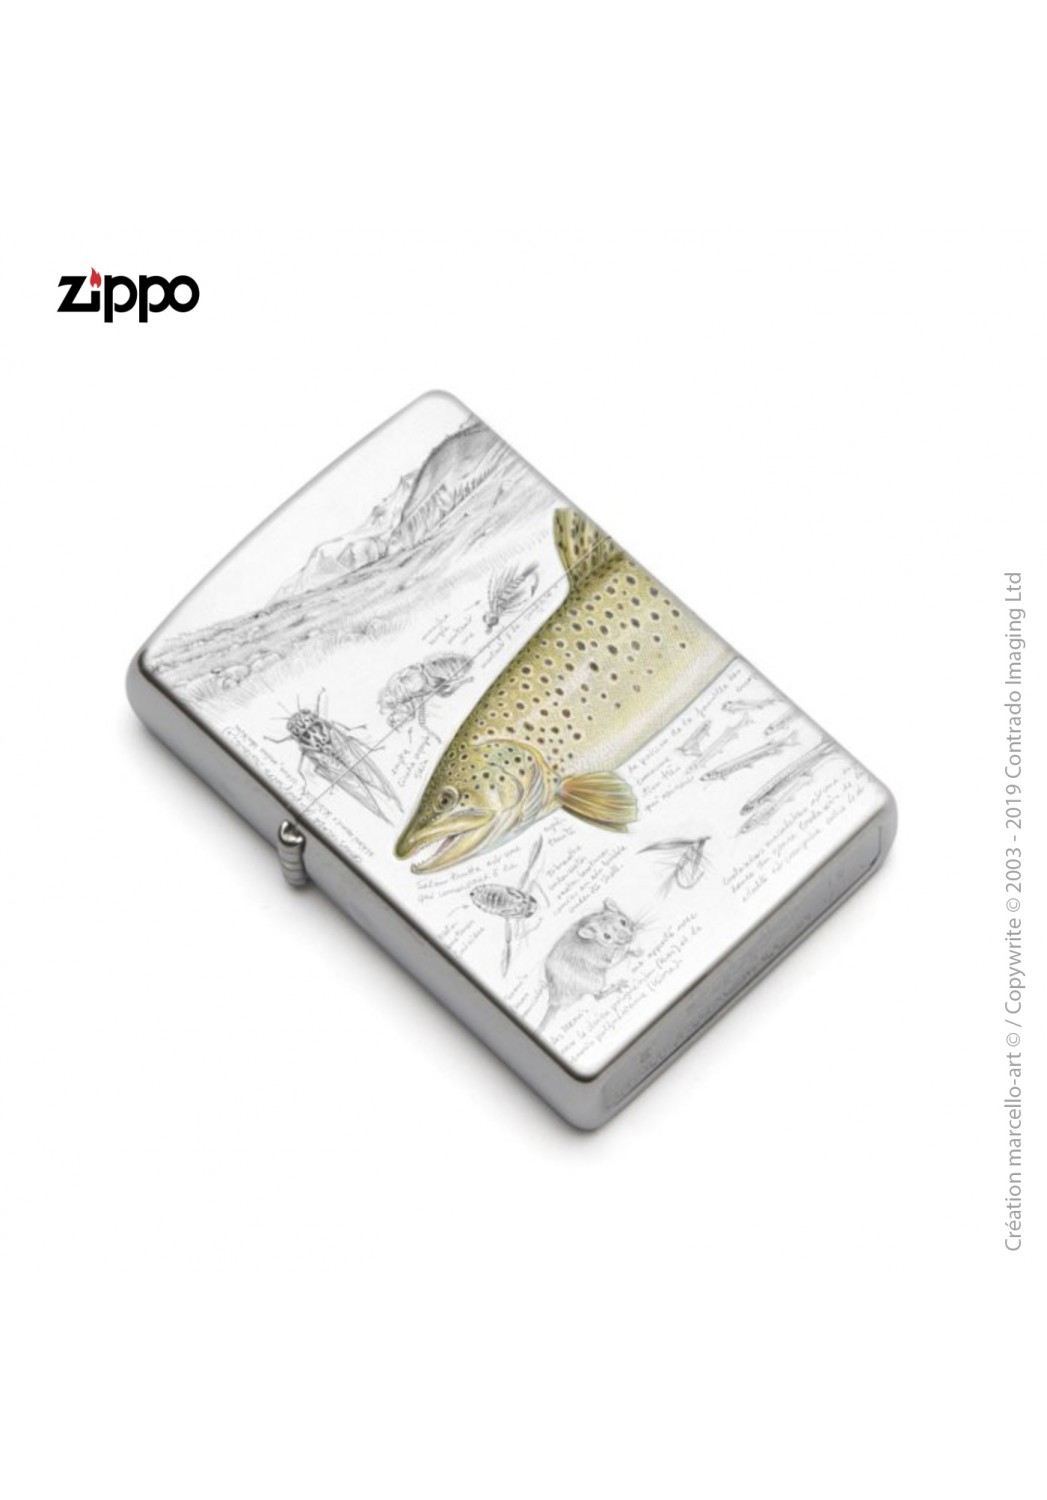 Marcello-art : Accessoires de décoration Zippo 372 truite fario